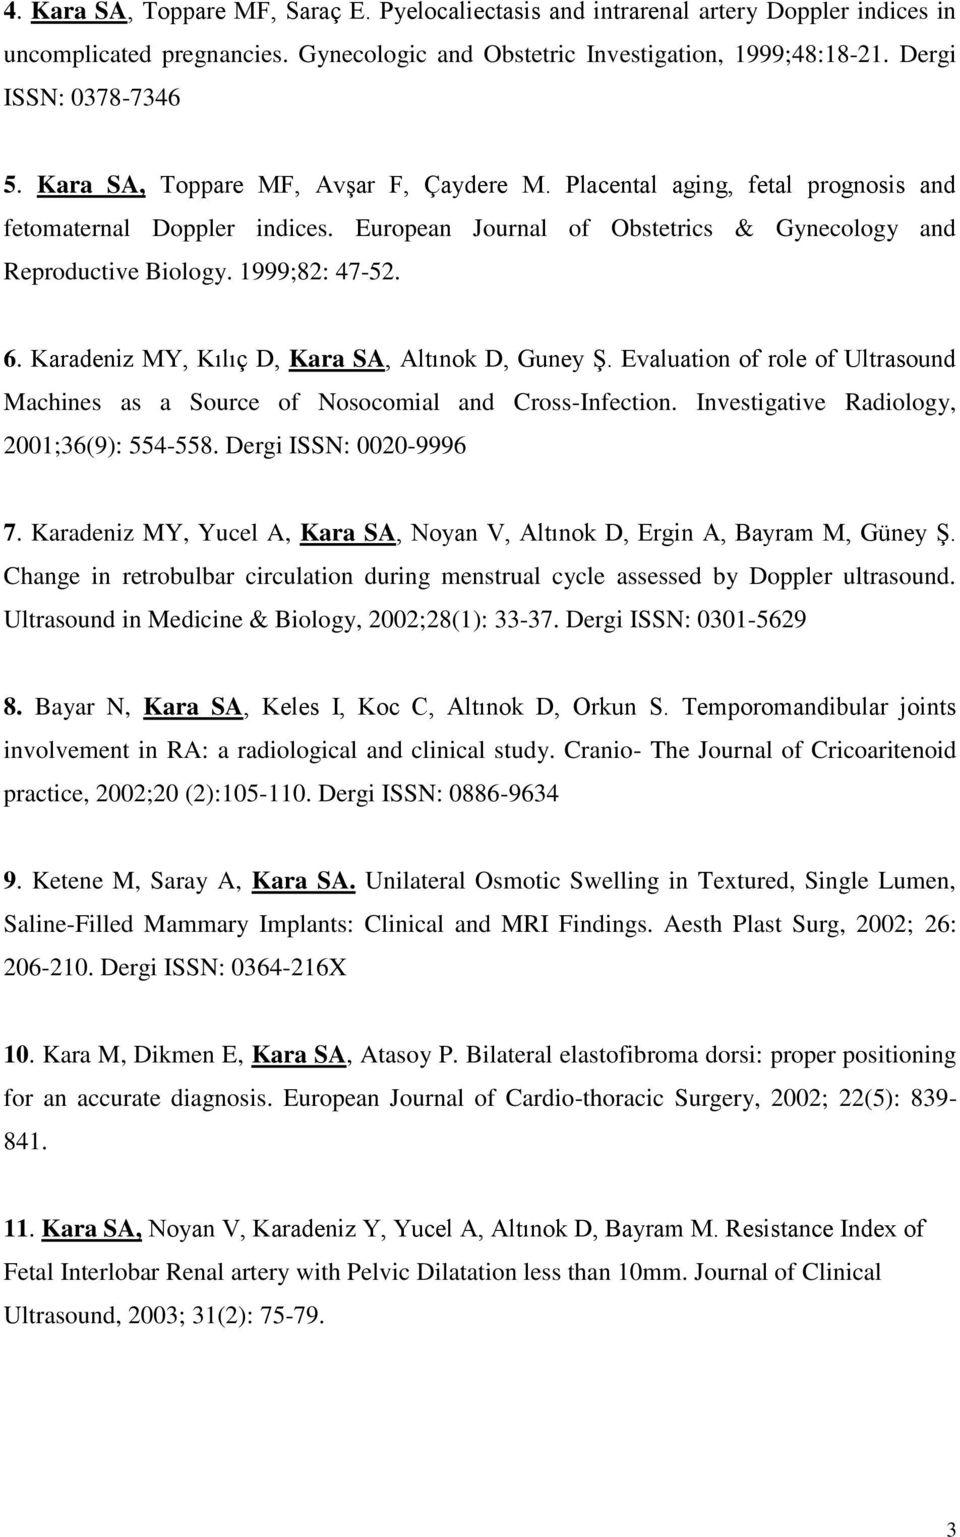 Karadeniz MY, Kılıç D, Kara SA, Altınok D, Guney Ş. Evaluation of role of Ultrasound Machines as a Source of Nosocomial and Cross-Infection. Investigative Radiology, 2001;36(9): 554-558.